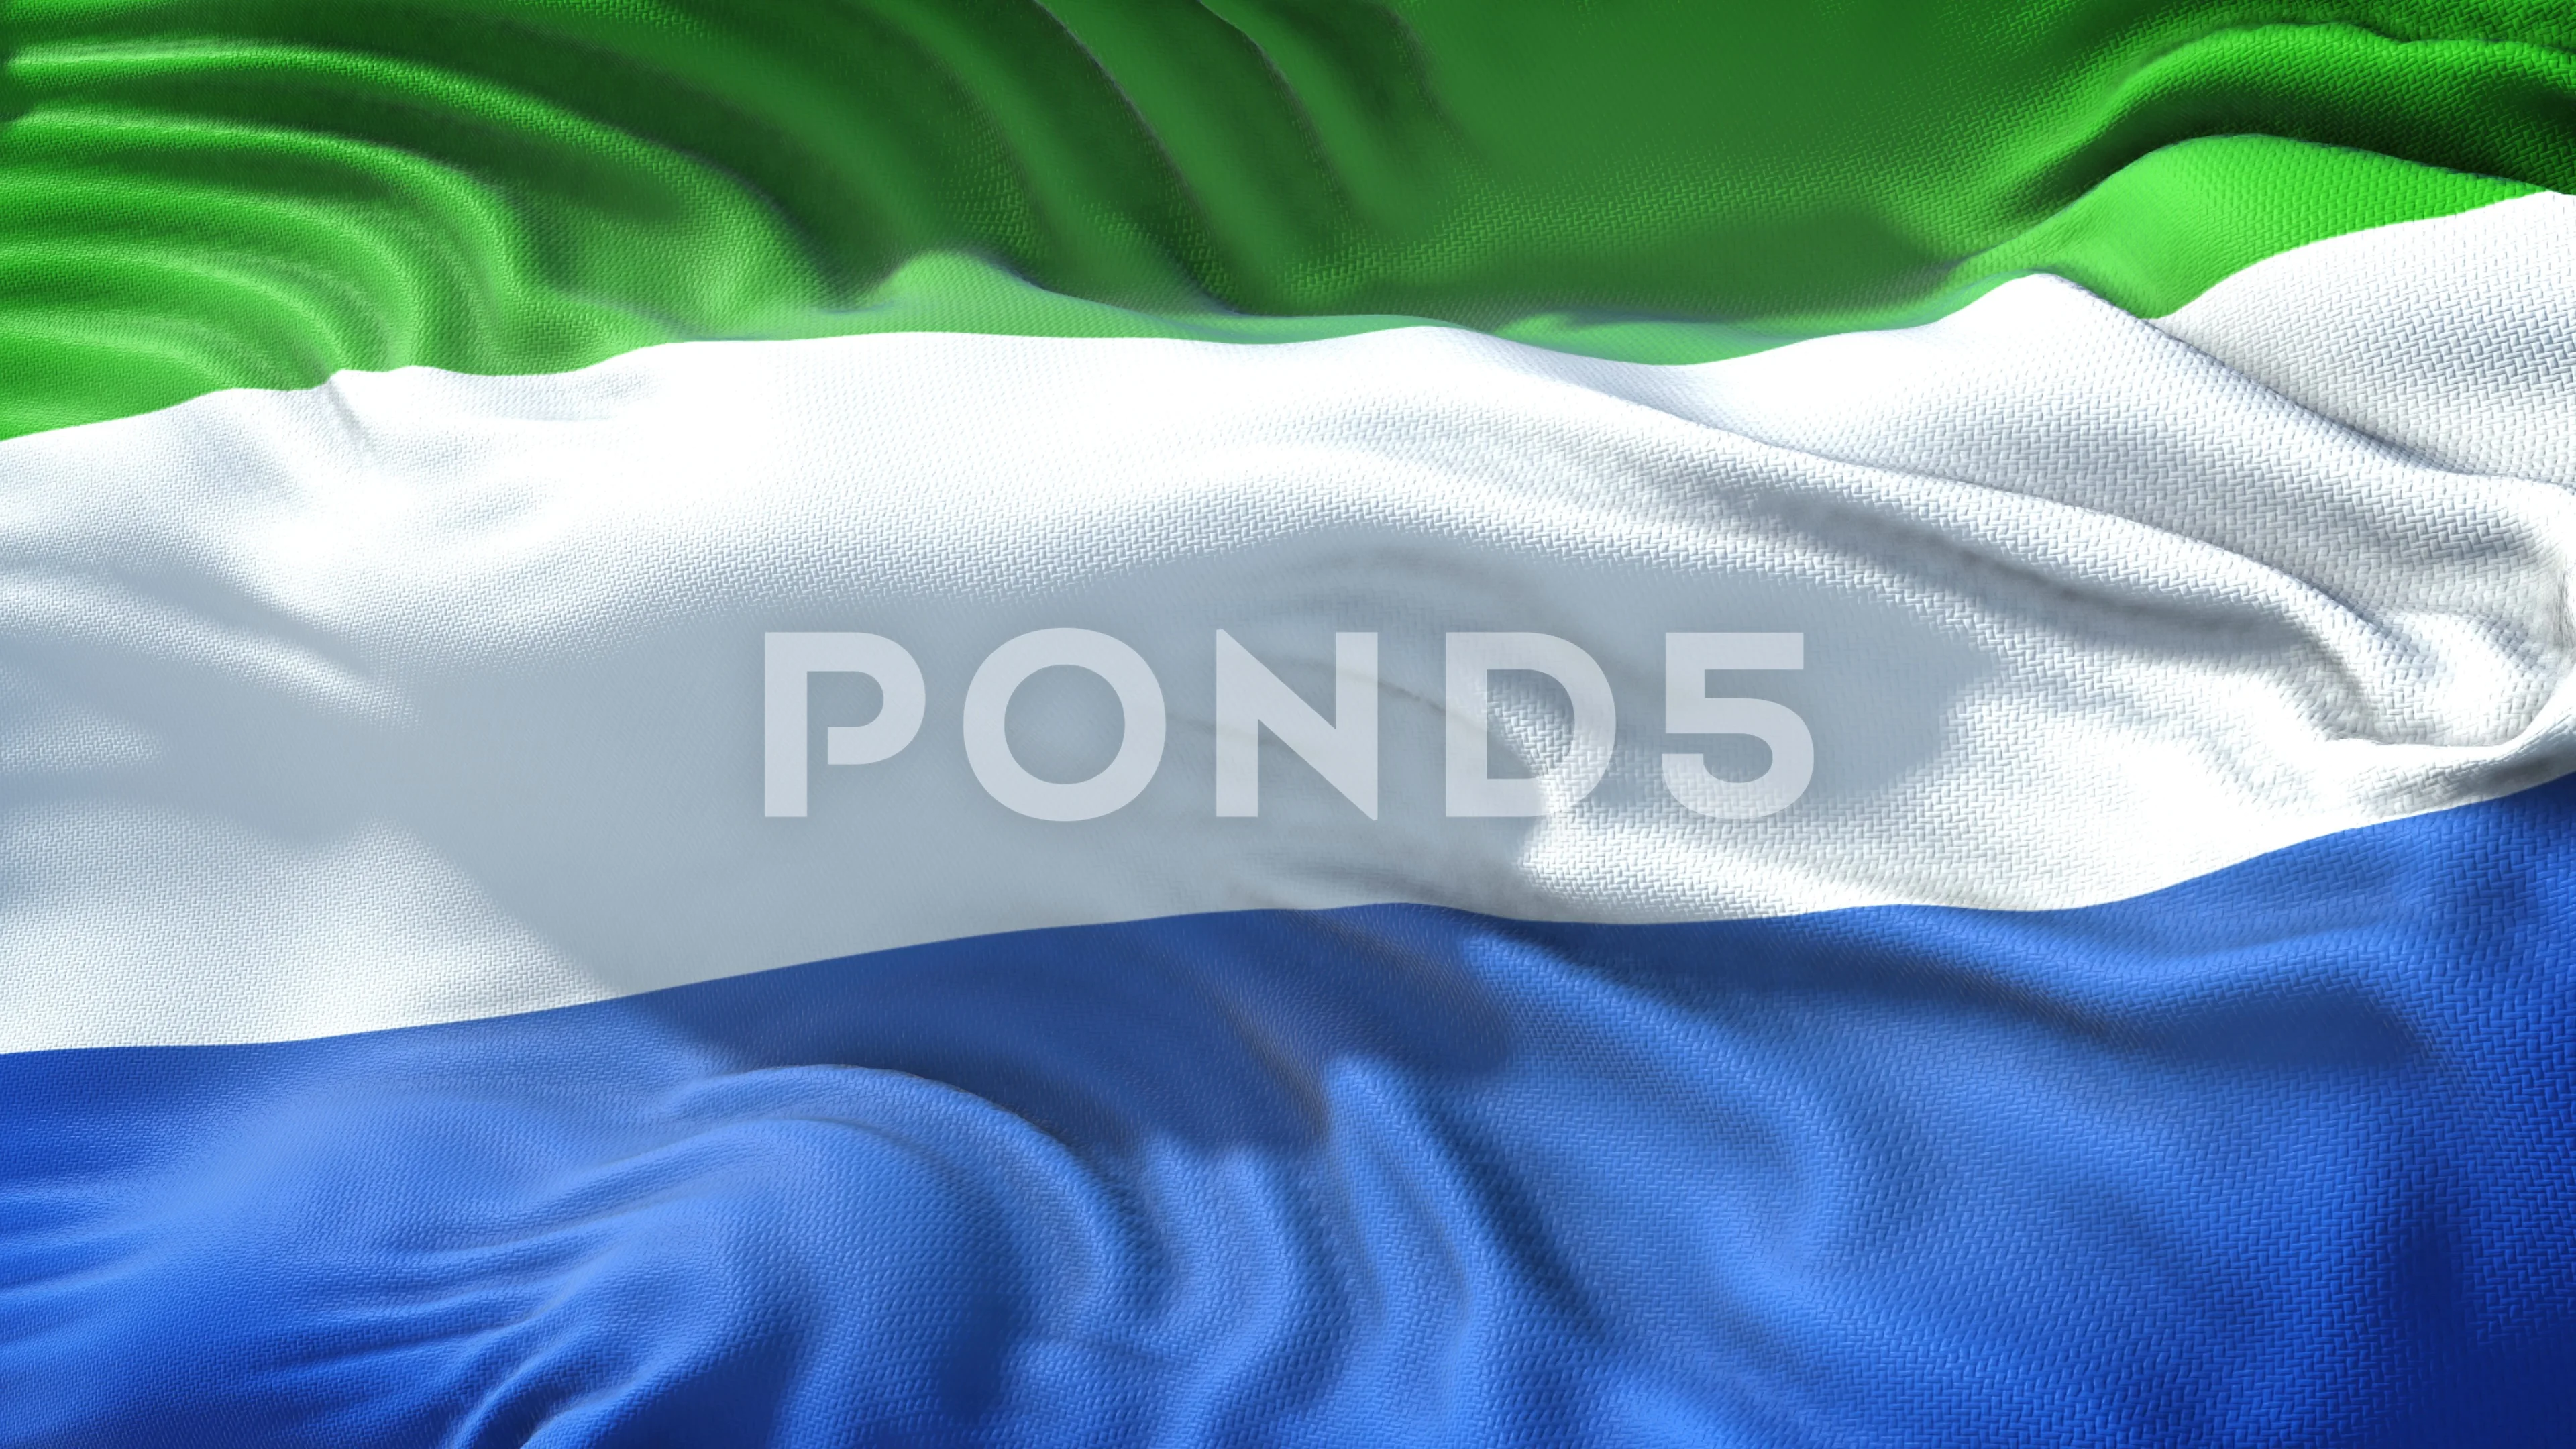 Republic Of Sierra Leone Stock Footage ~ Royalty Free Stock Videos | Pond5